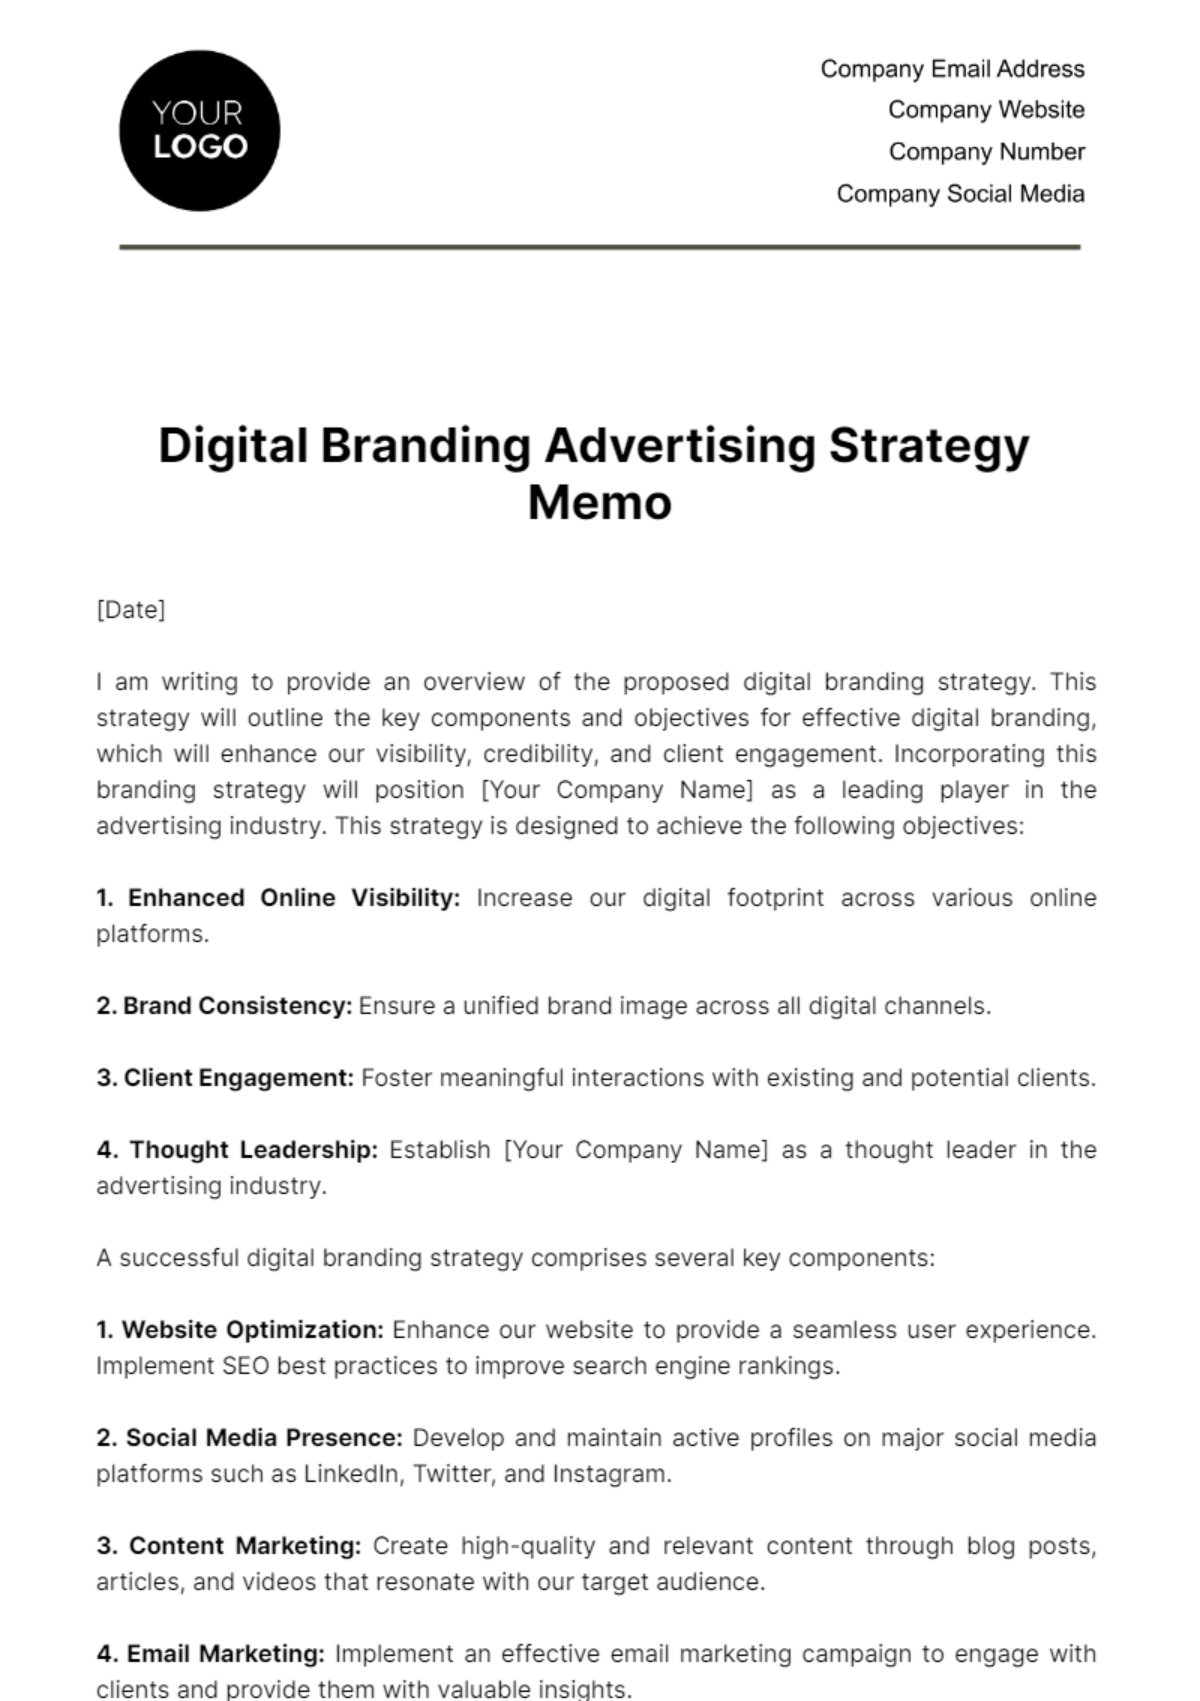 Free Digital Branding Advertising Strategy Memo Template